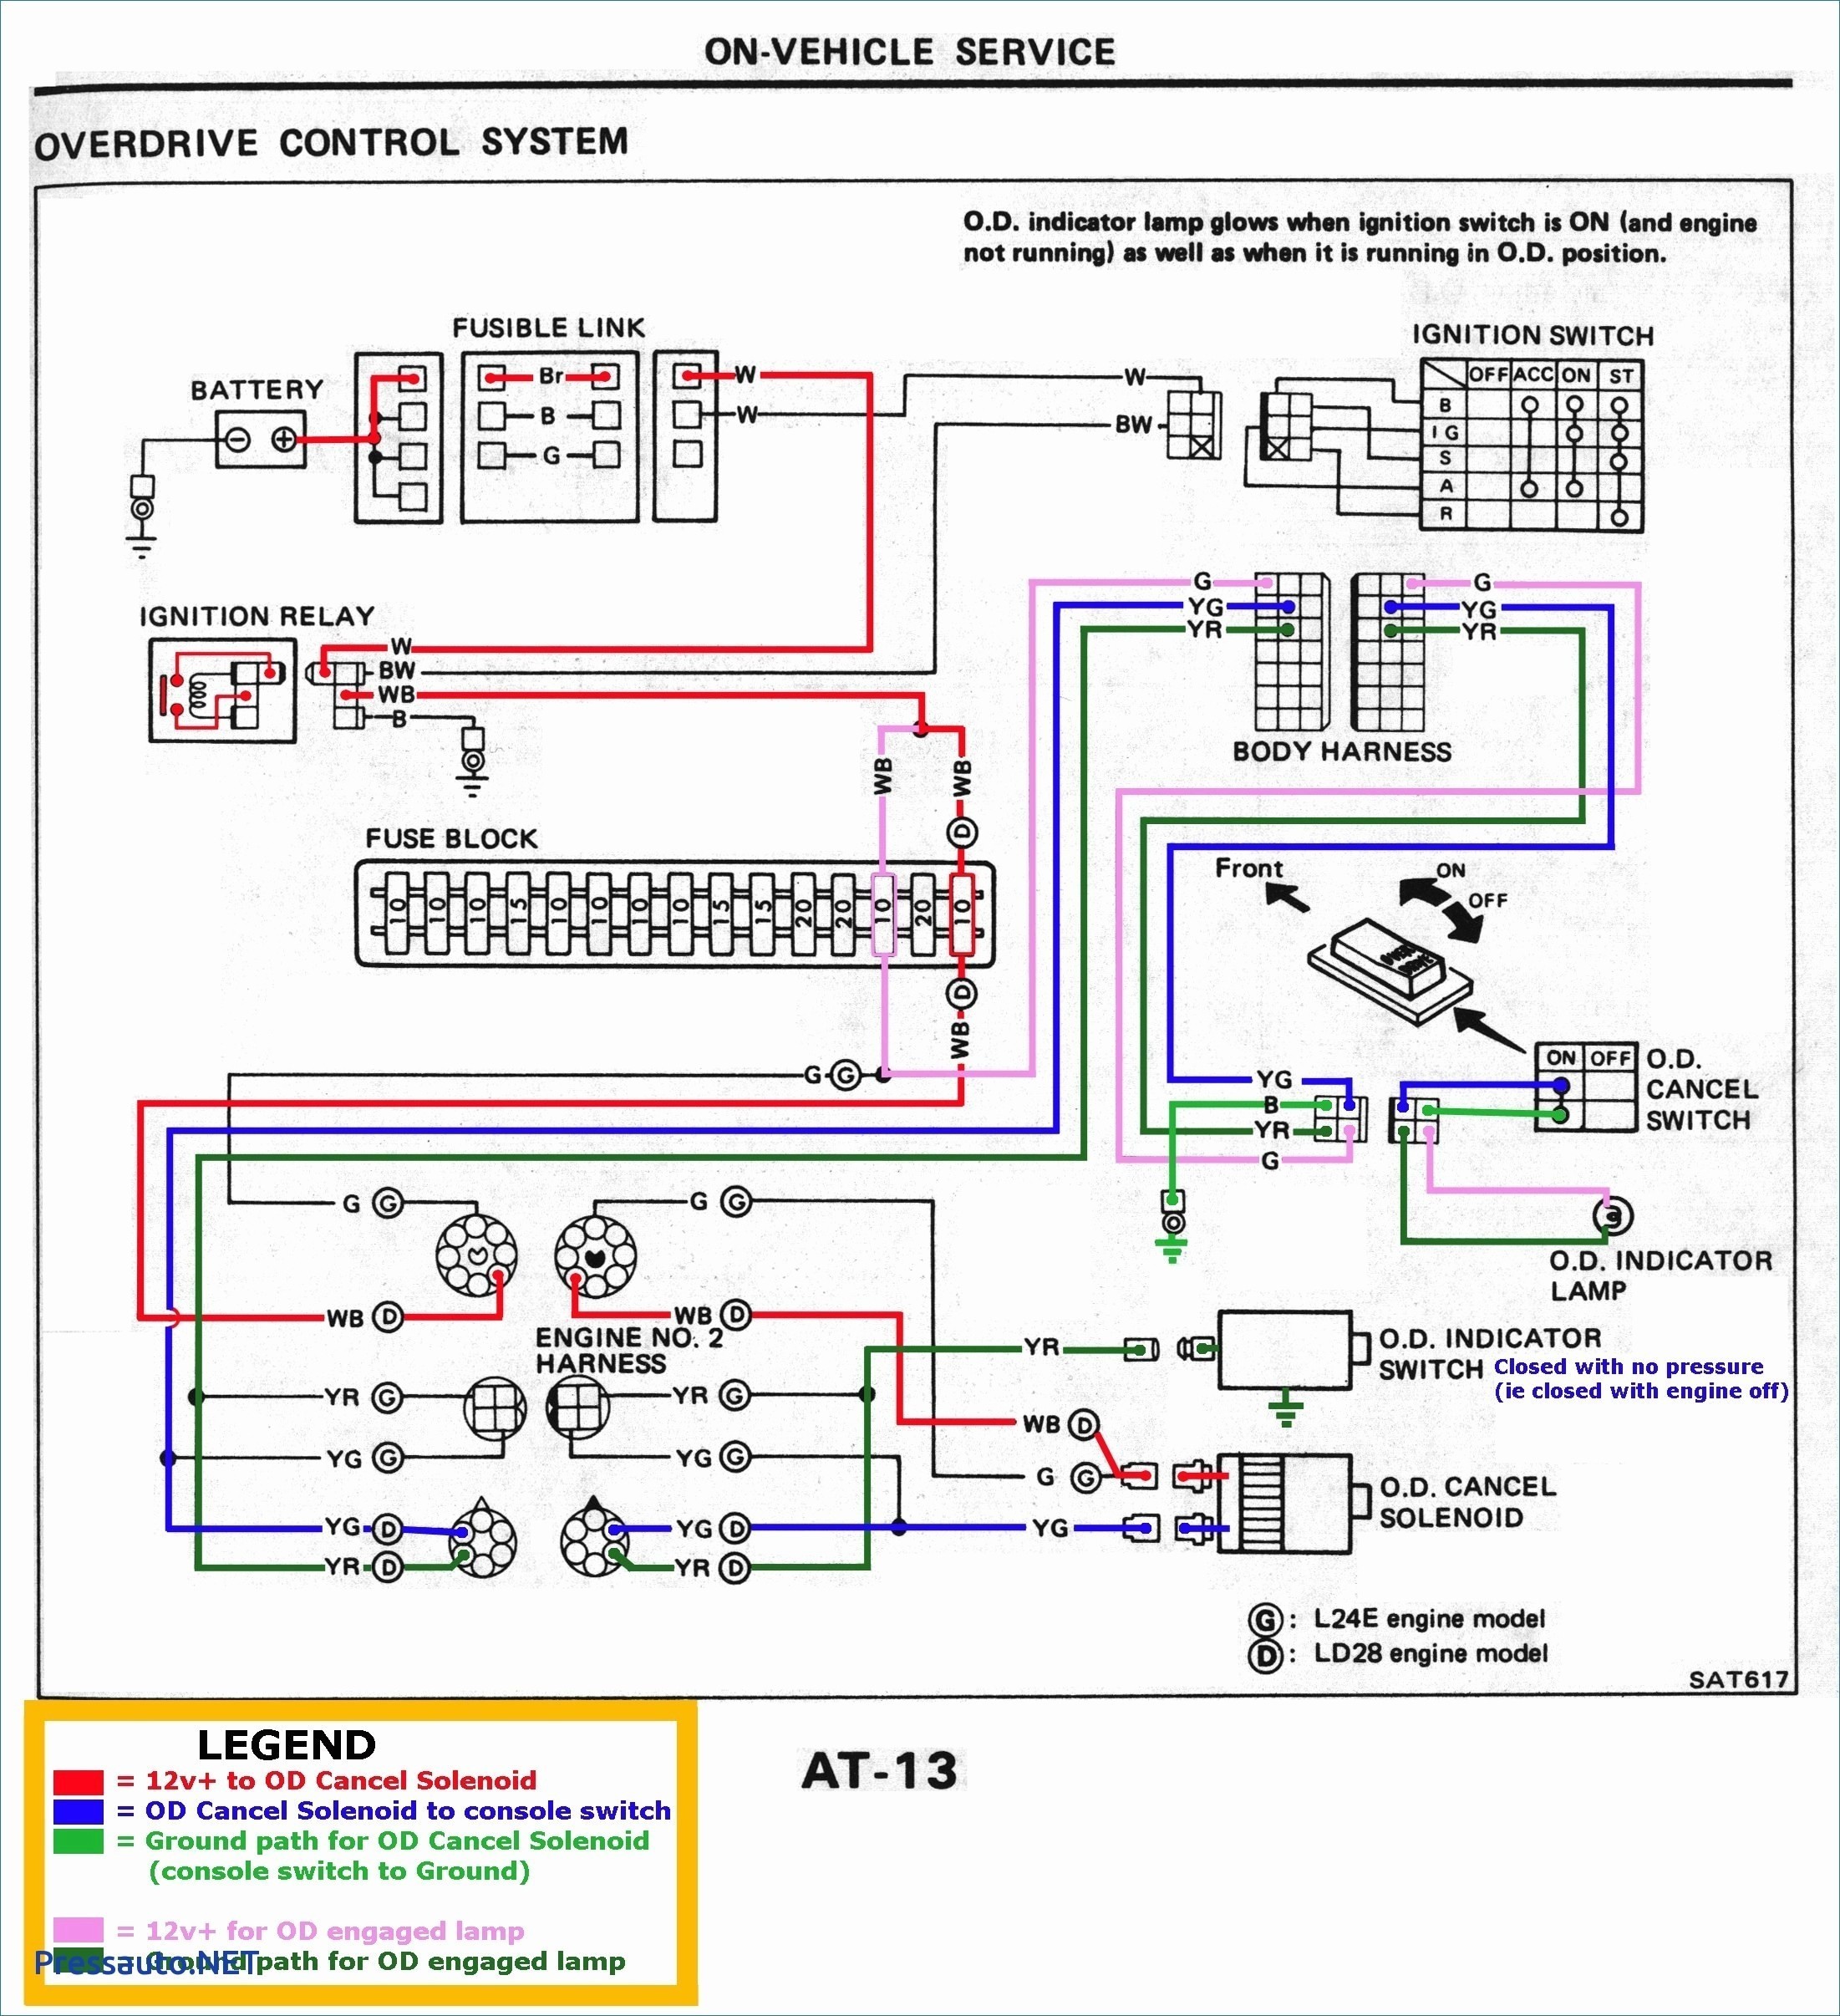 1997 Nissan Maxima Engine Diagram Fuse Box Diagram Peugeot 106 Automotive Wiring Diagrams Of 1997 Nissan Maxima Engine Diagram